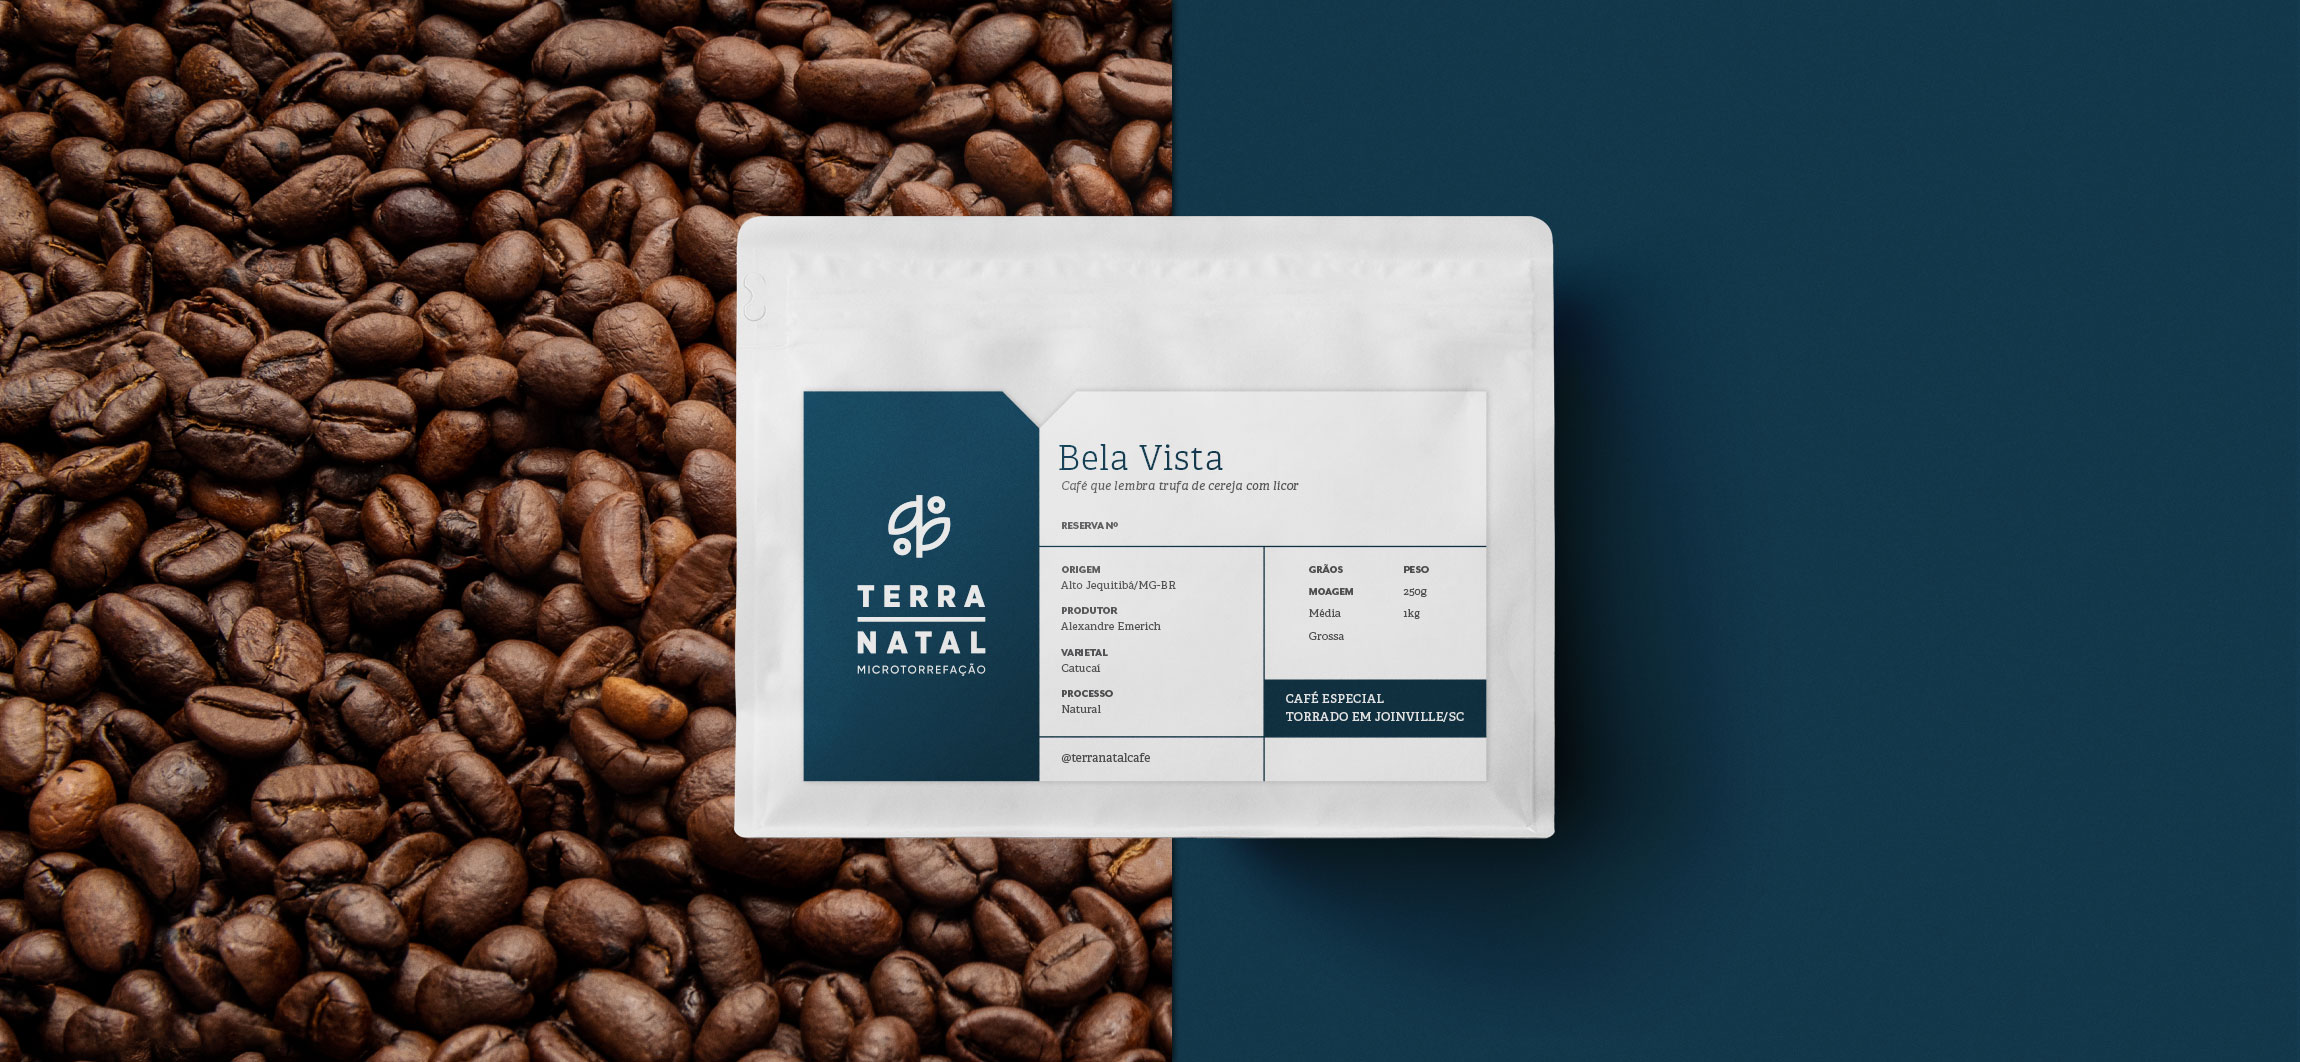 Minimalistic Packaging Design for Terra Natal Coffee Roasters